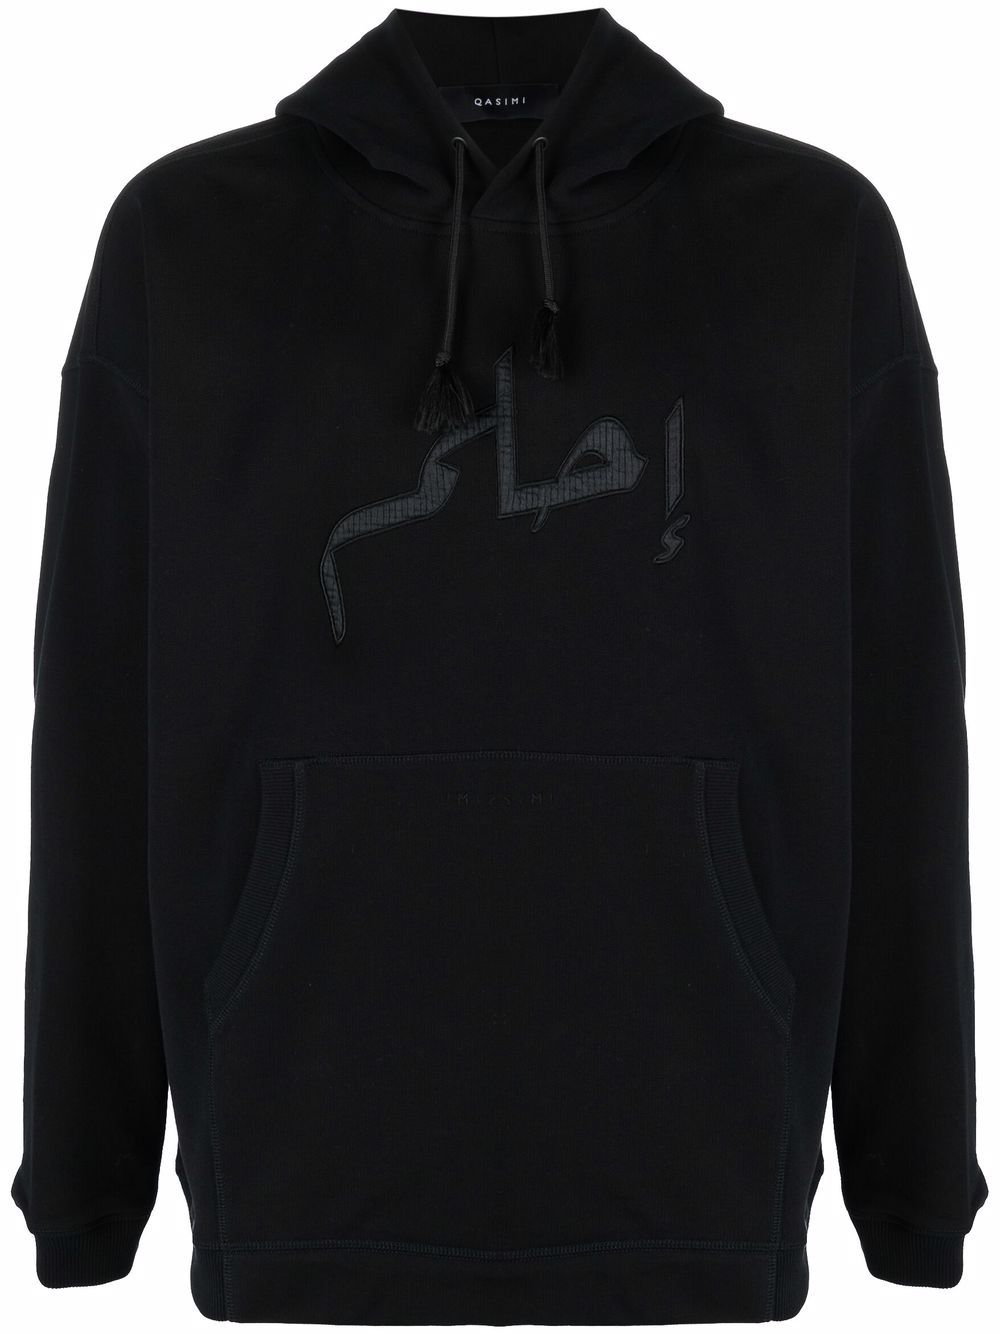 Qasimi Dream pullover hoodie - Black von Qasimi